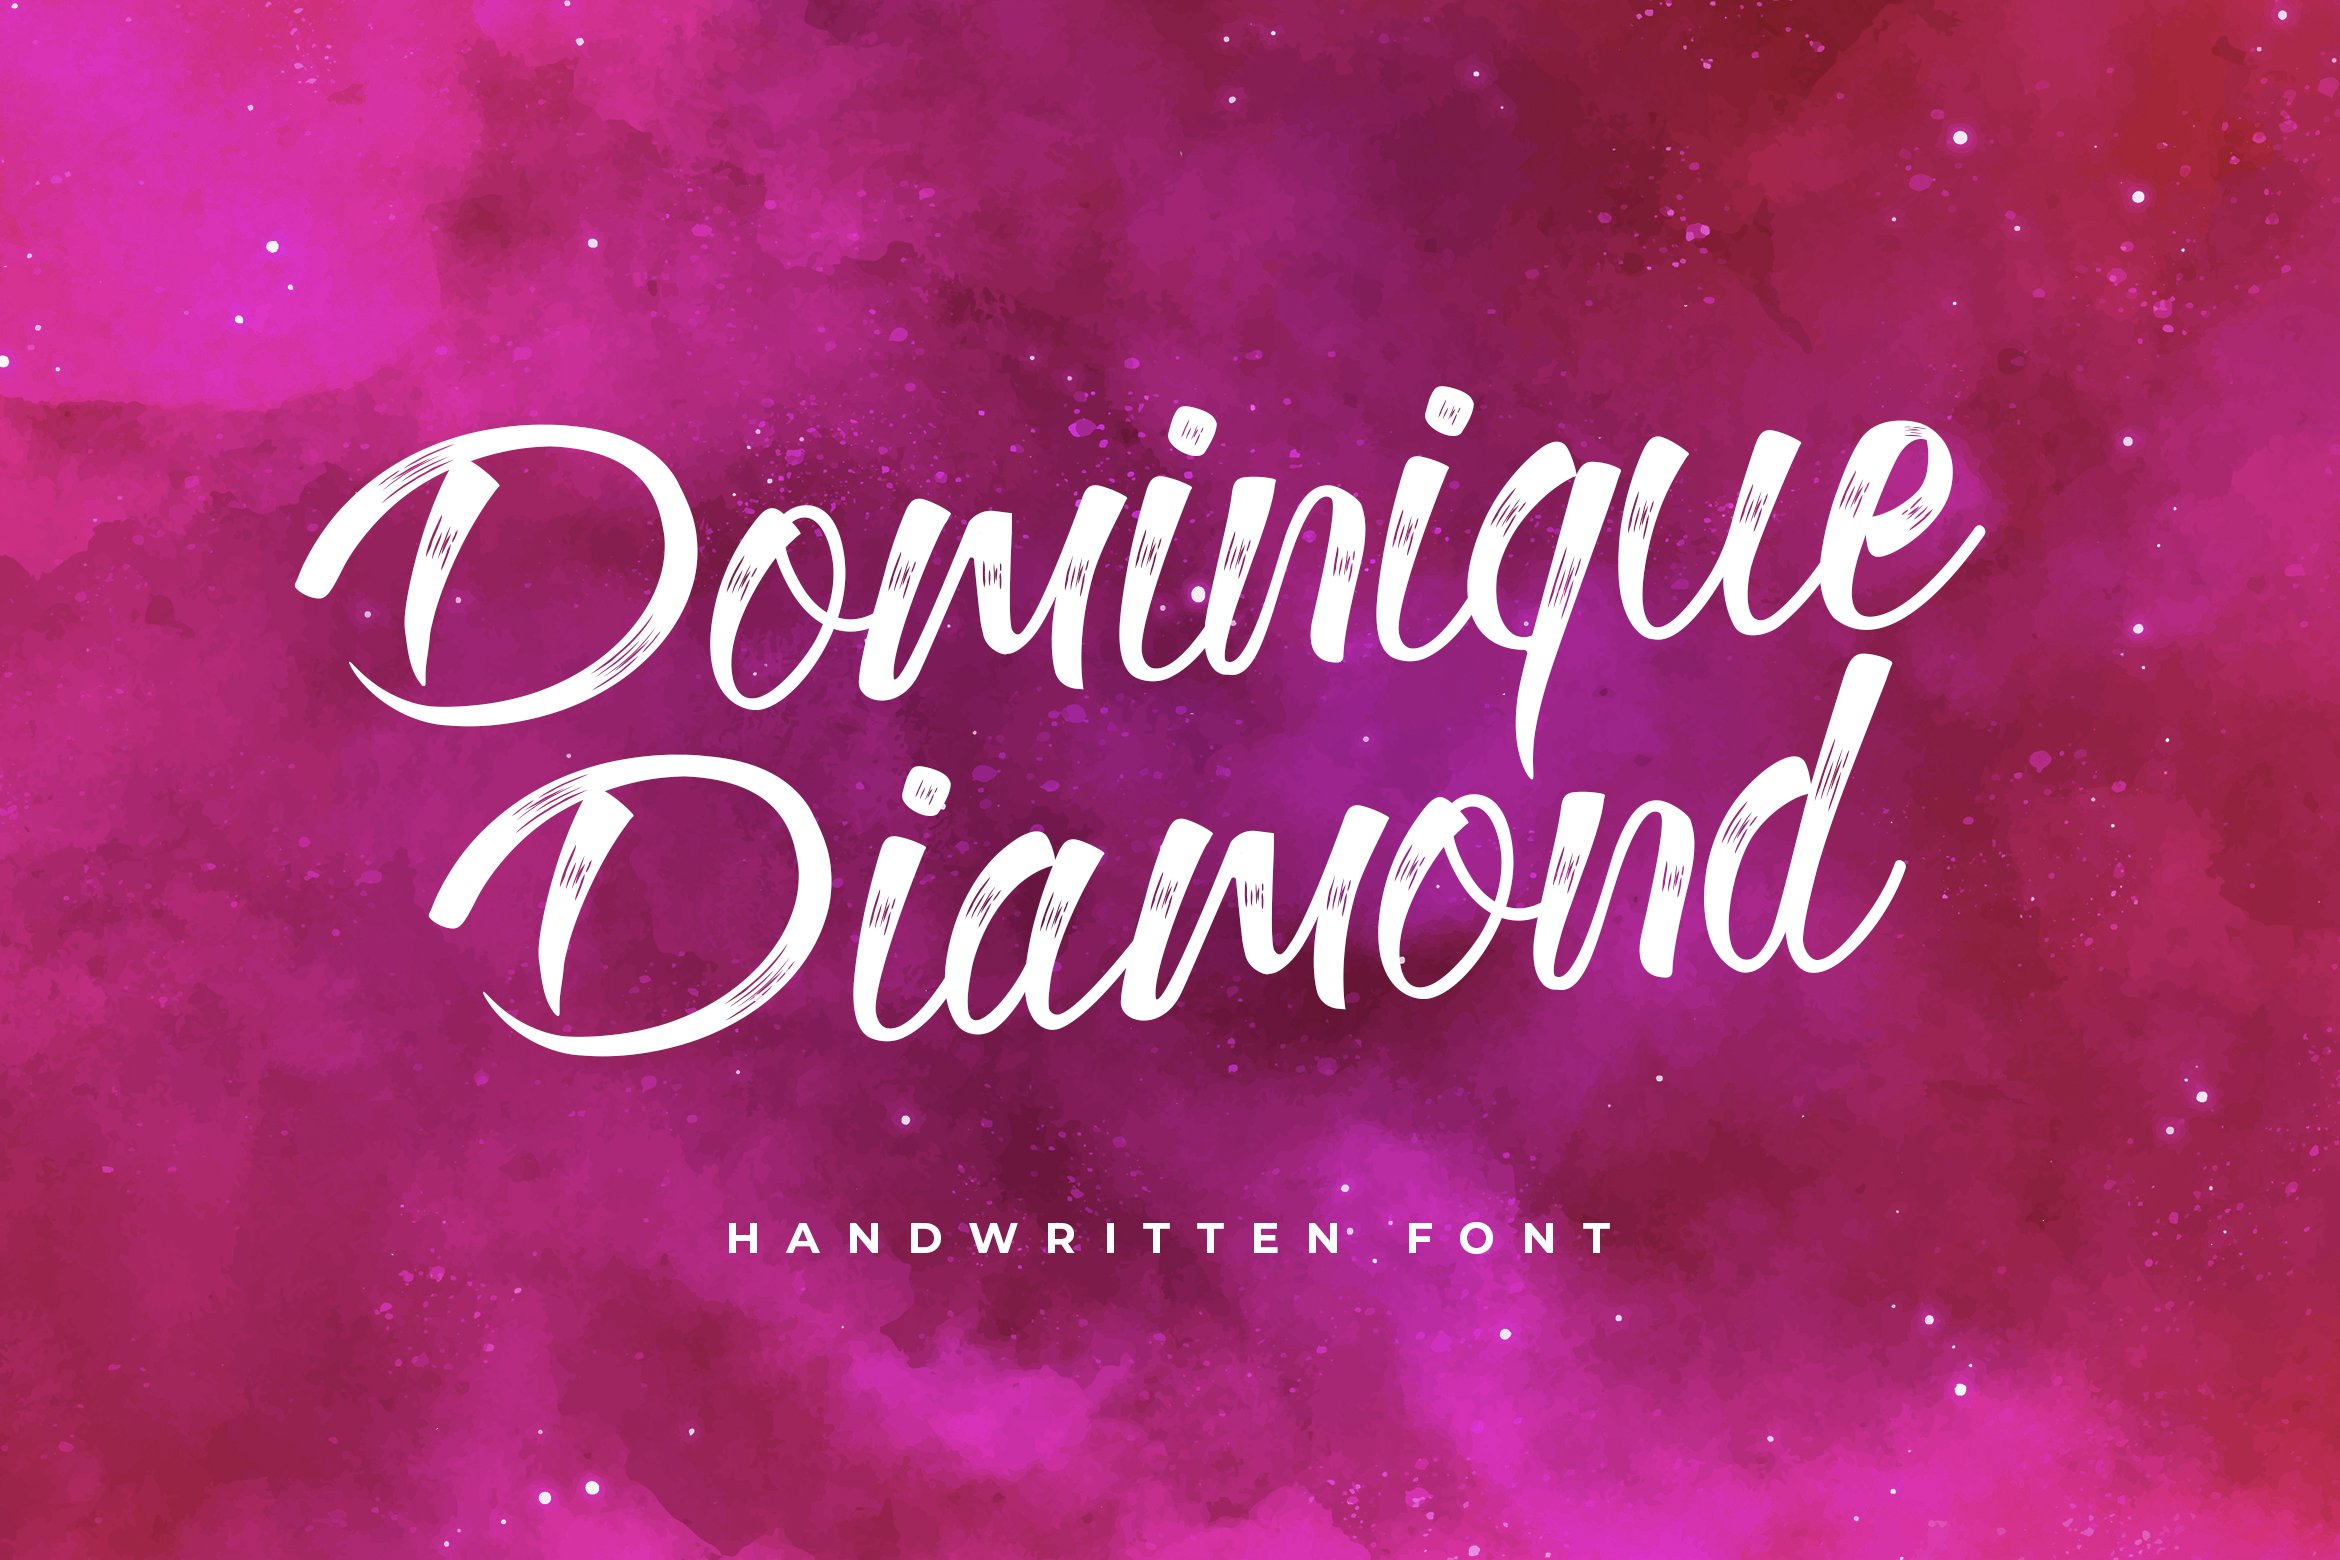 Dominique Diamond Calligraphy Font cover image.